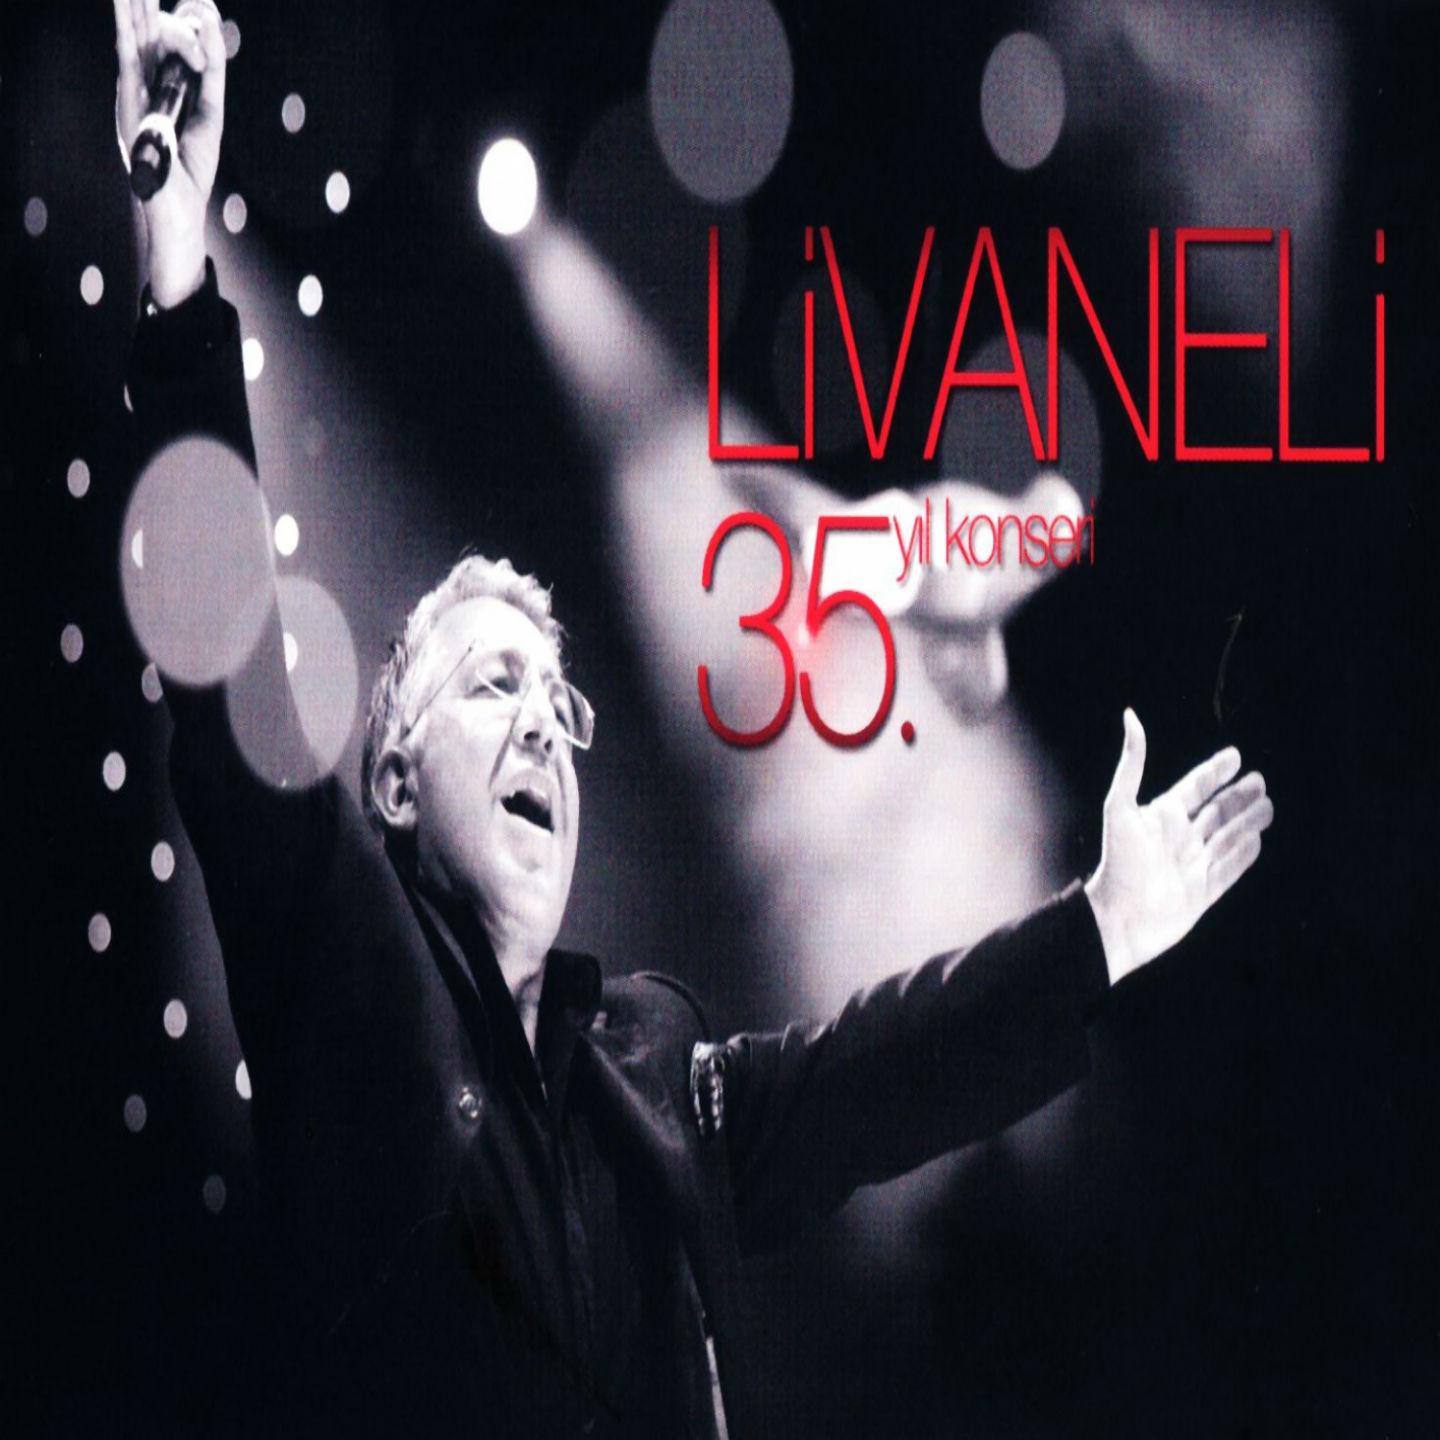 Livaneli Konserleri Live, 35. Y l Konseri